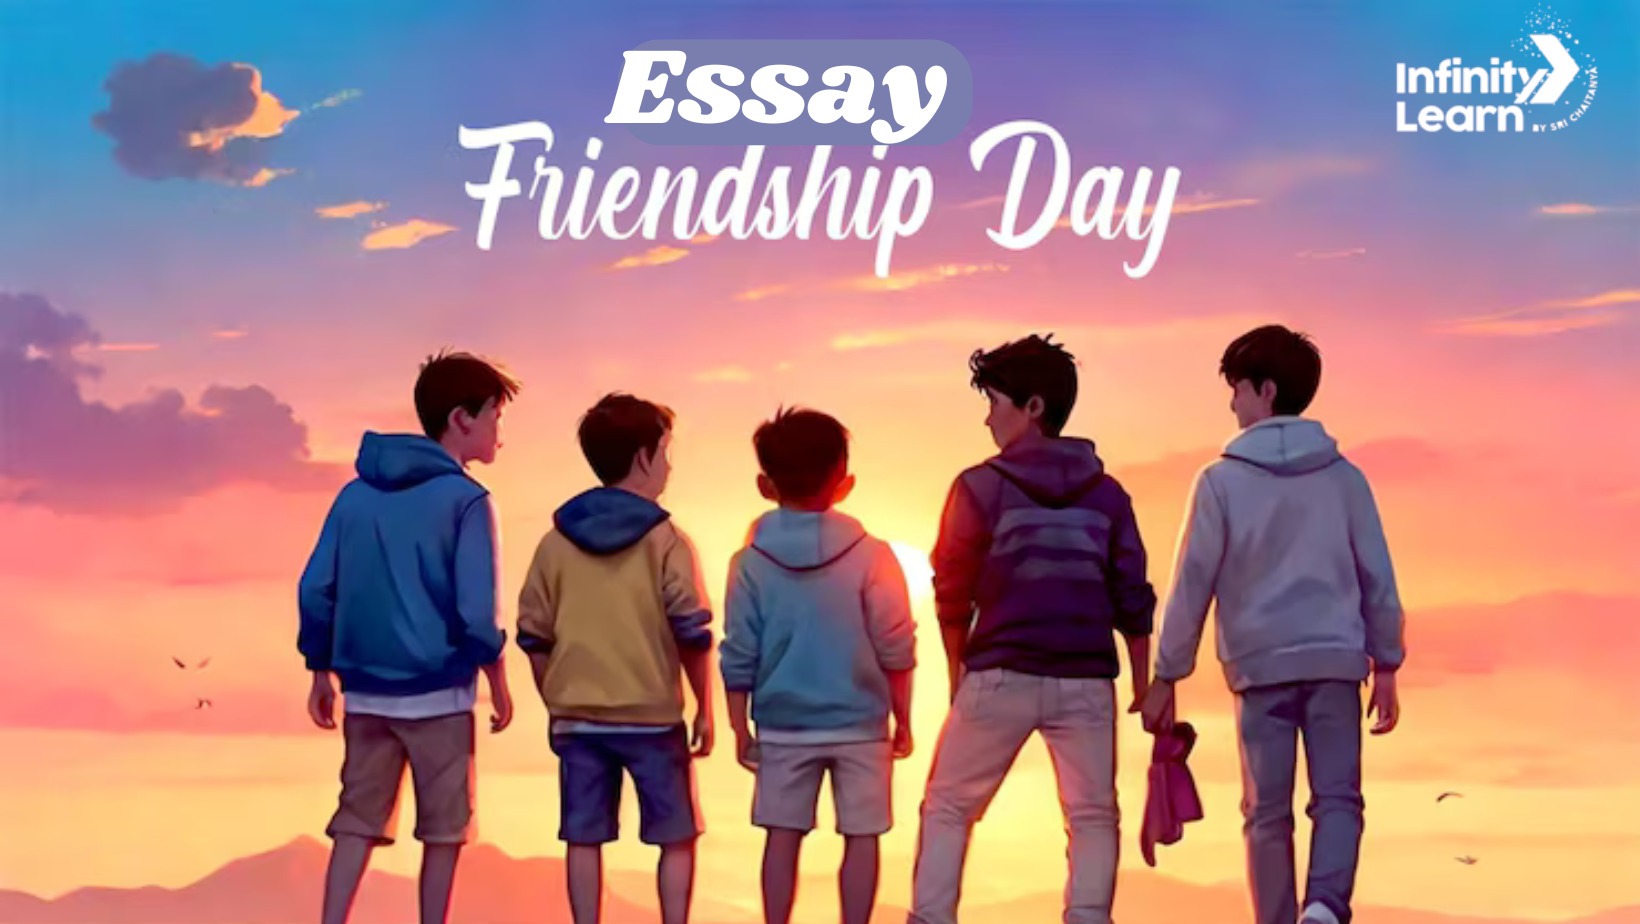 Essay on Friendship